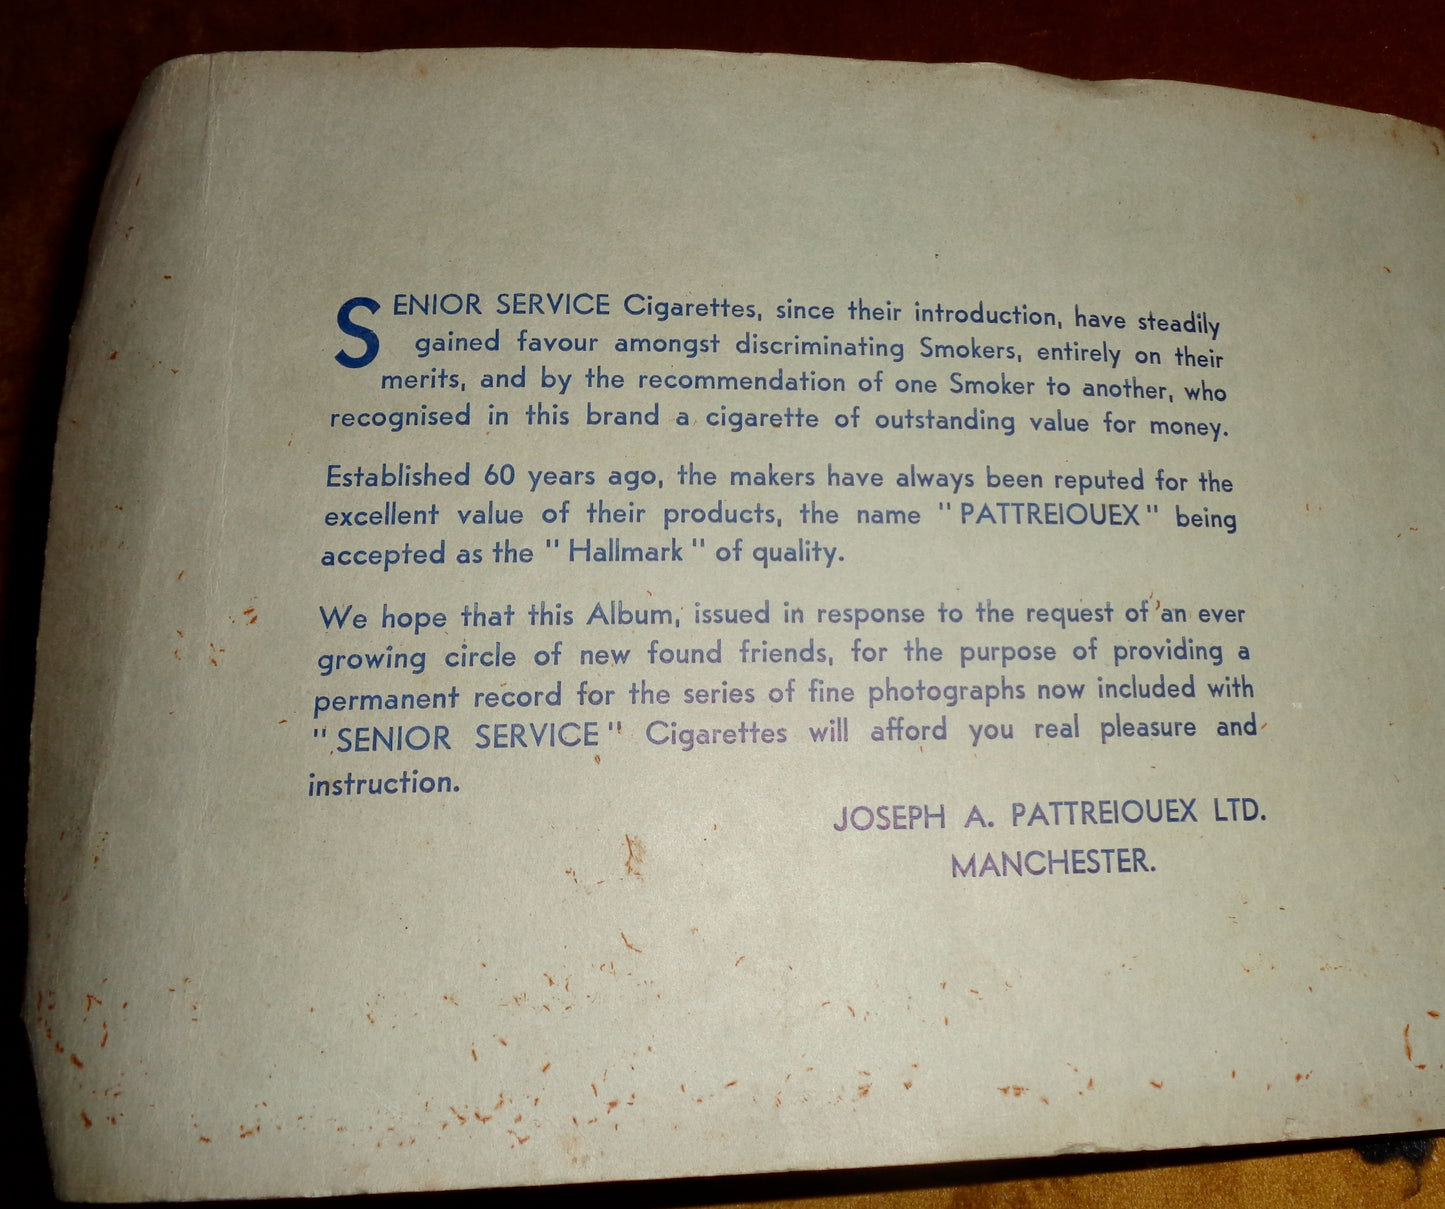 1939 Britain From The Air Senior Service Cigarette Card Album